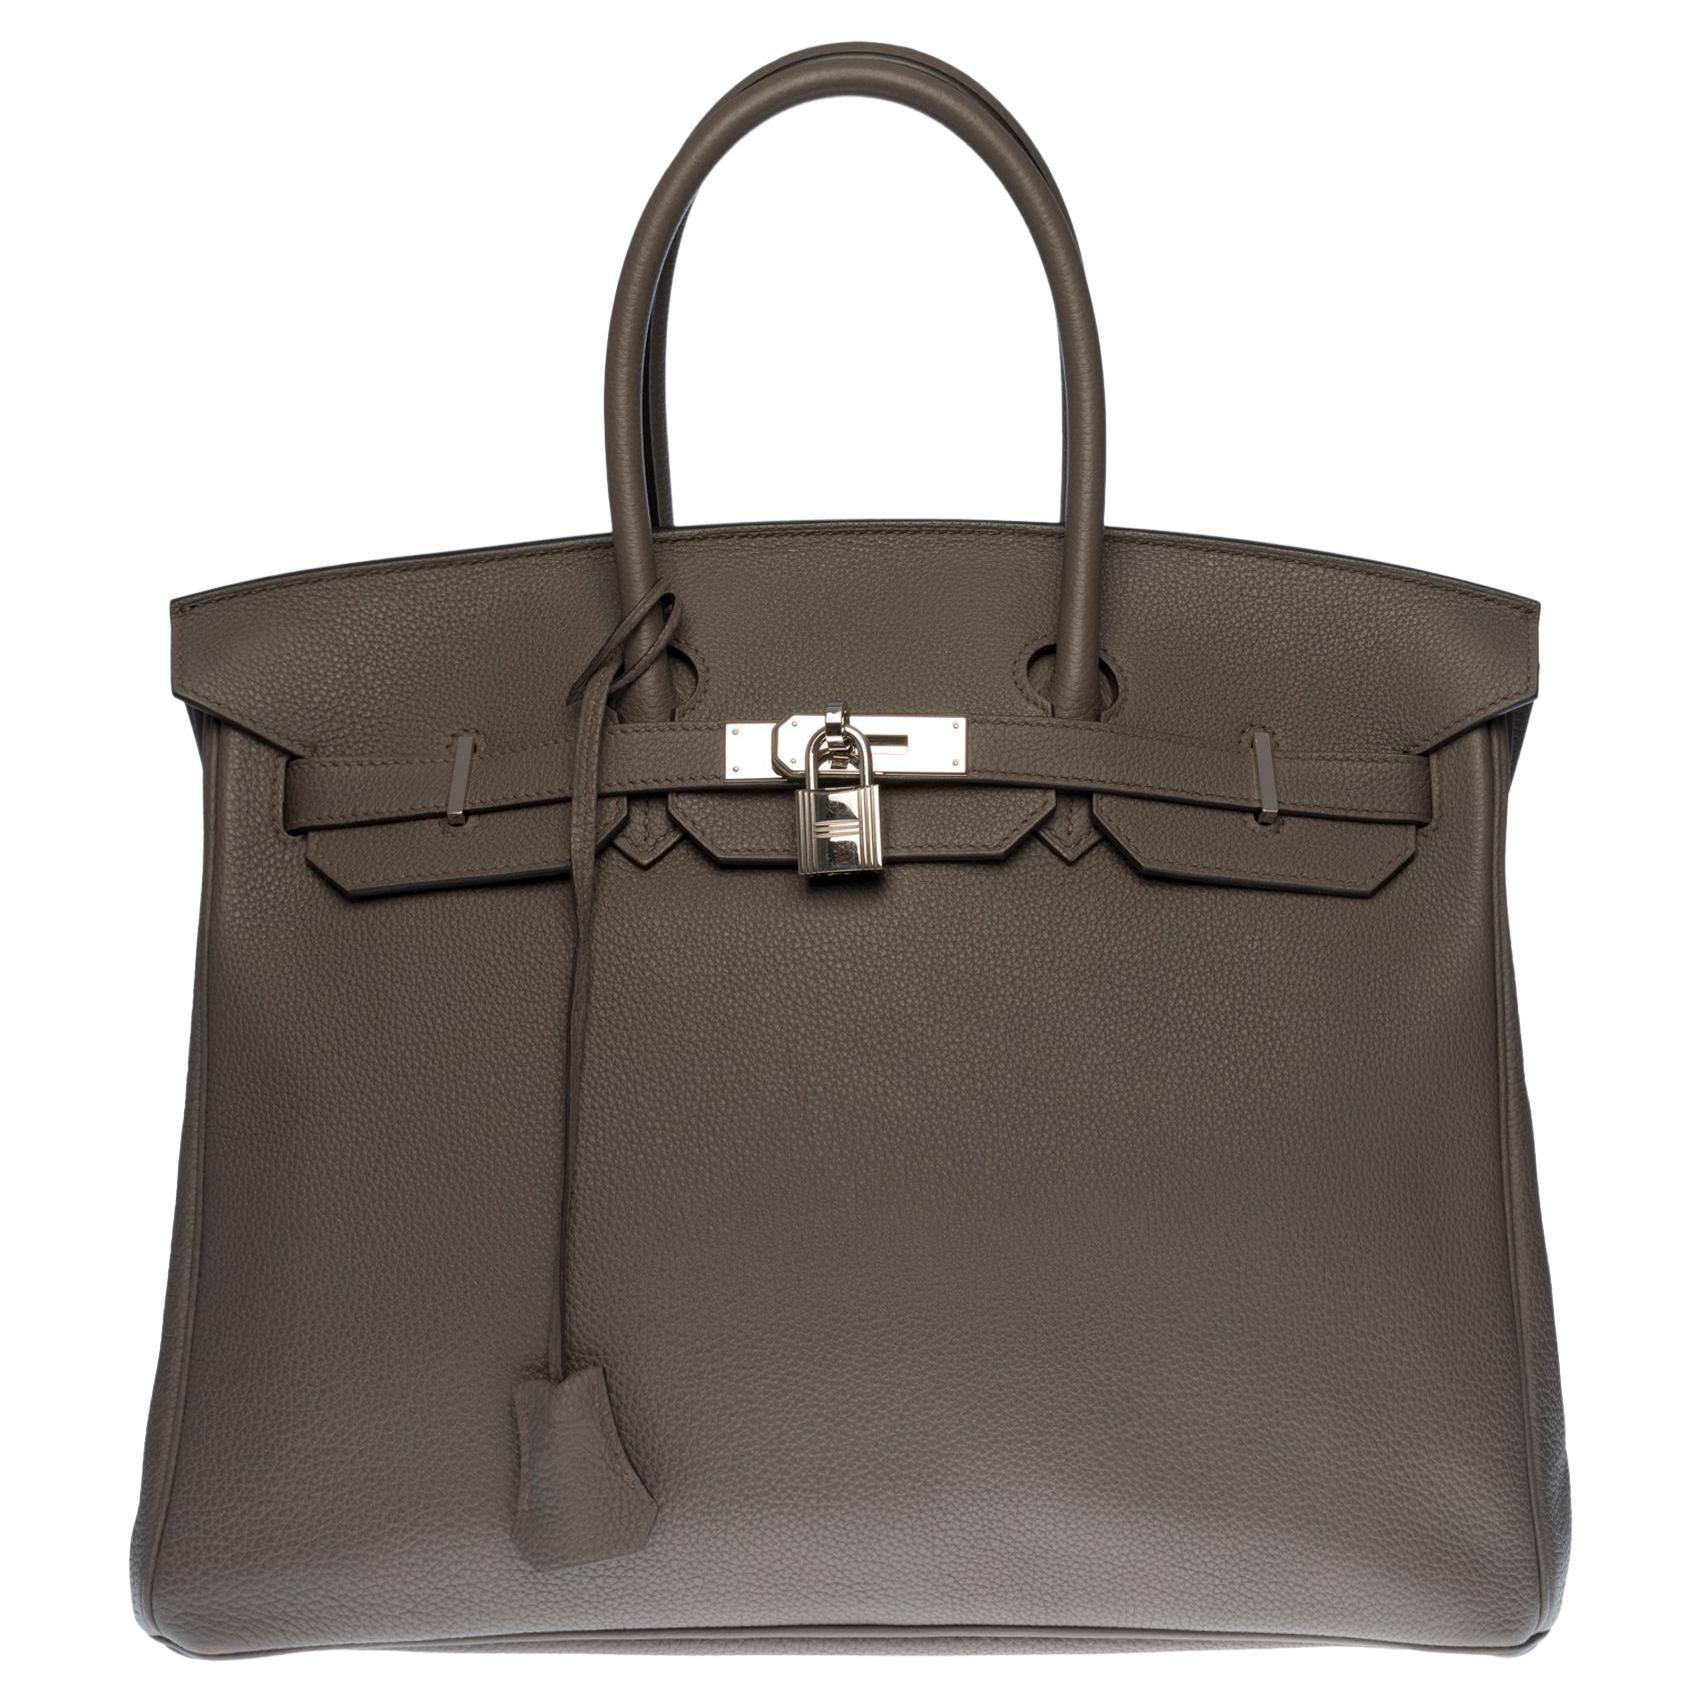 Almost New -Full set-Hermès Birkin 35 handbag in Etain Togo leather, SHW